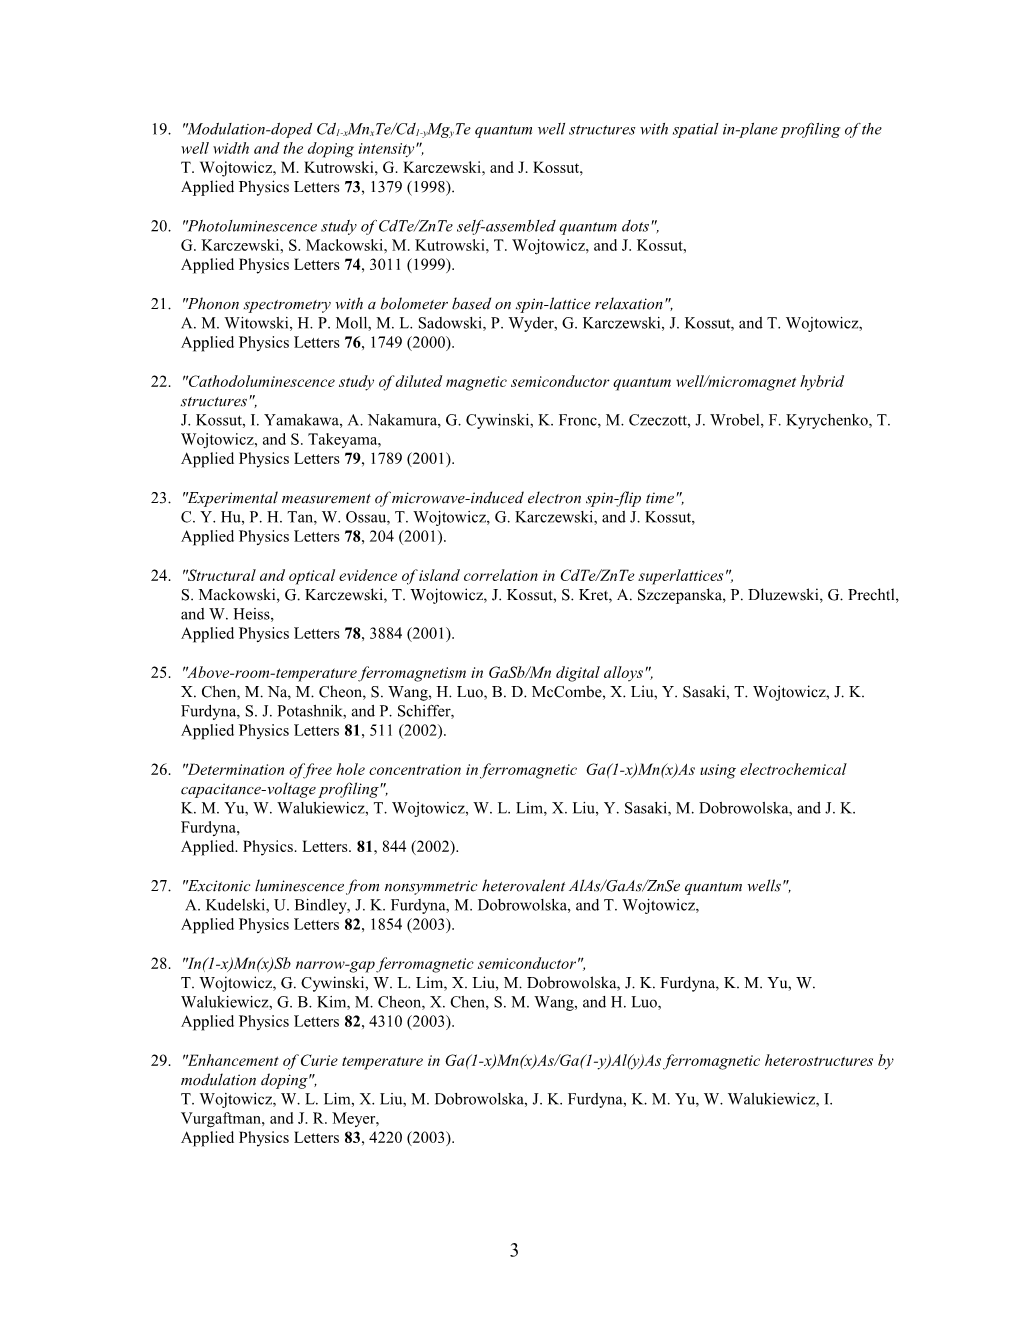 List of Publications s8